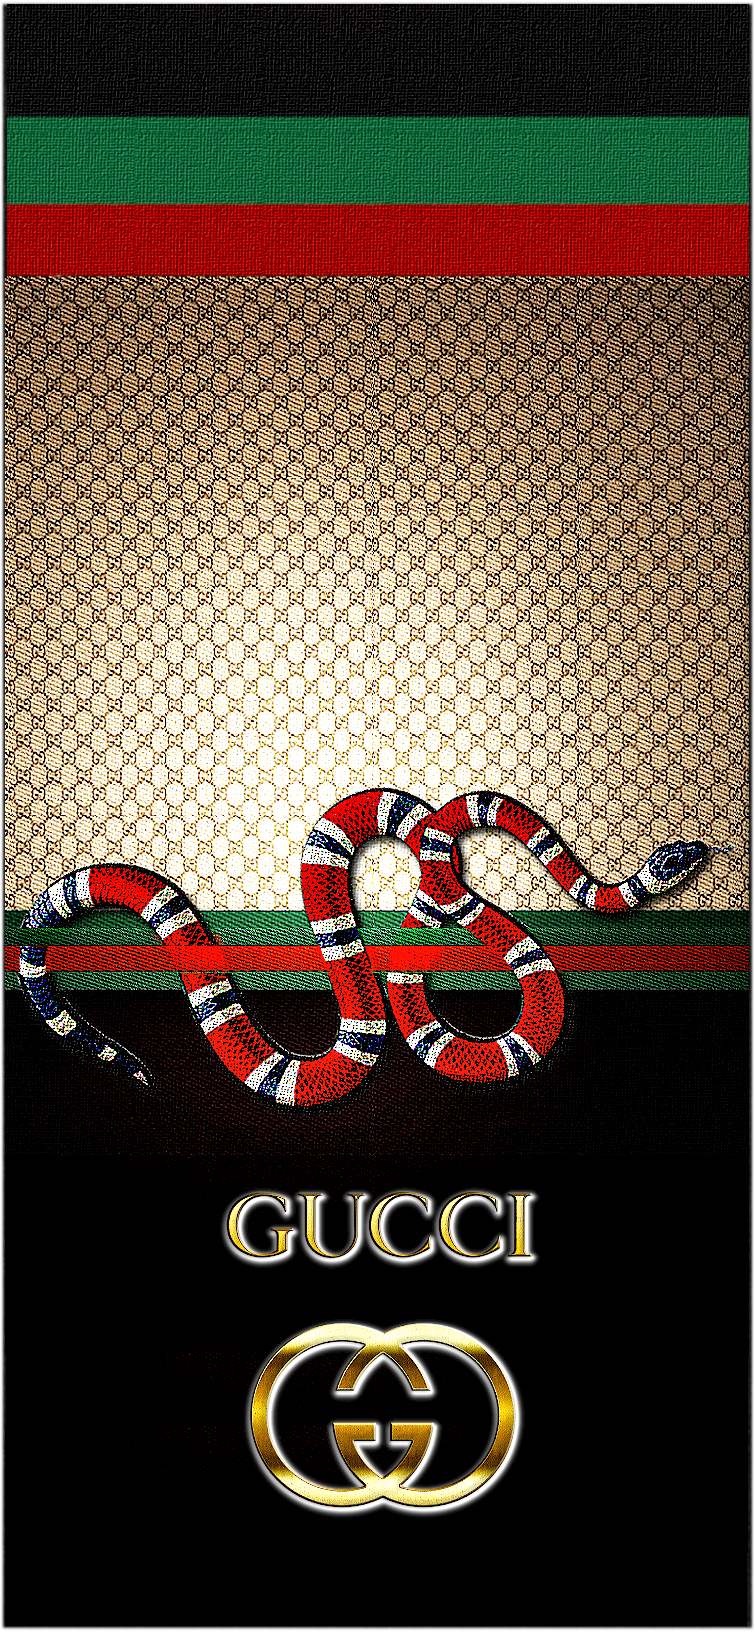 matras Zwembad Vallen Gucci Slithering Snake iPhone Wallpaper J Farhat by JFarhat on DeviantArt